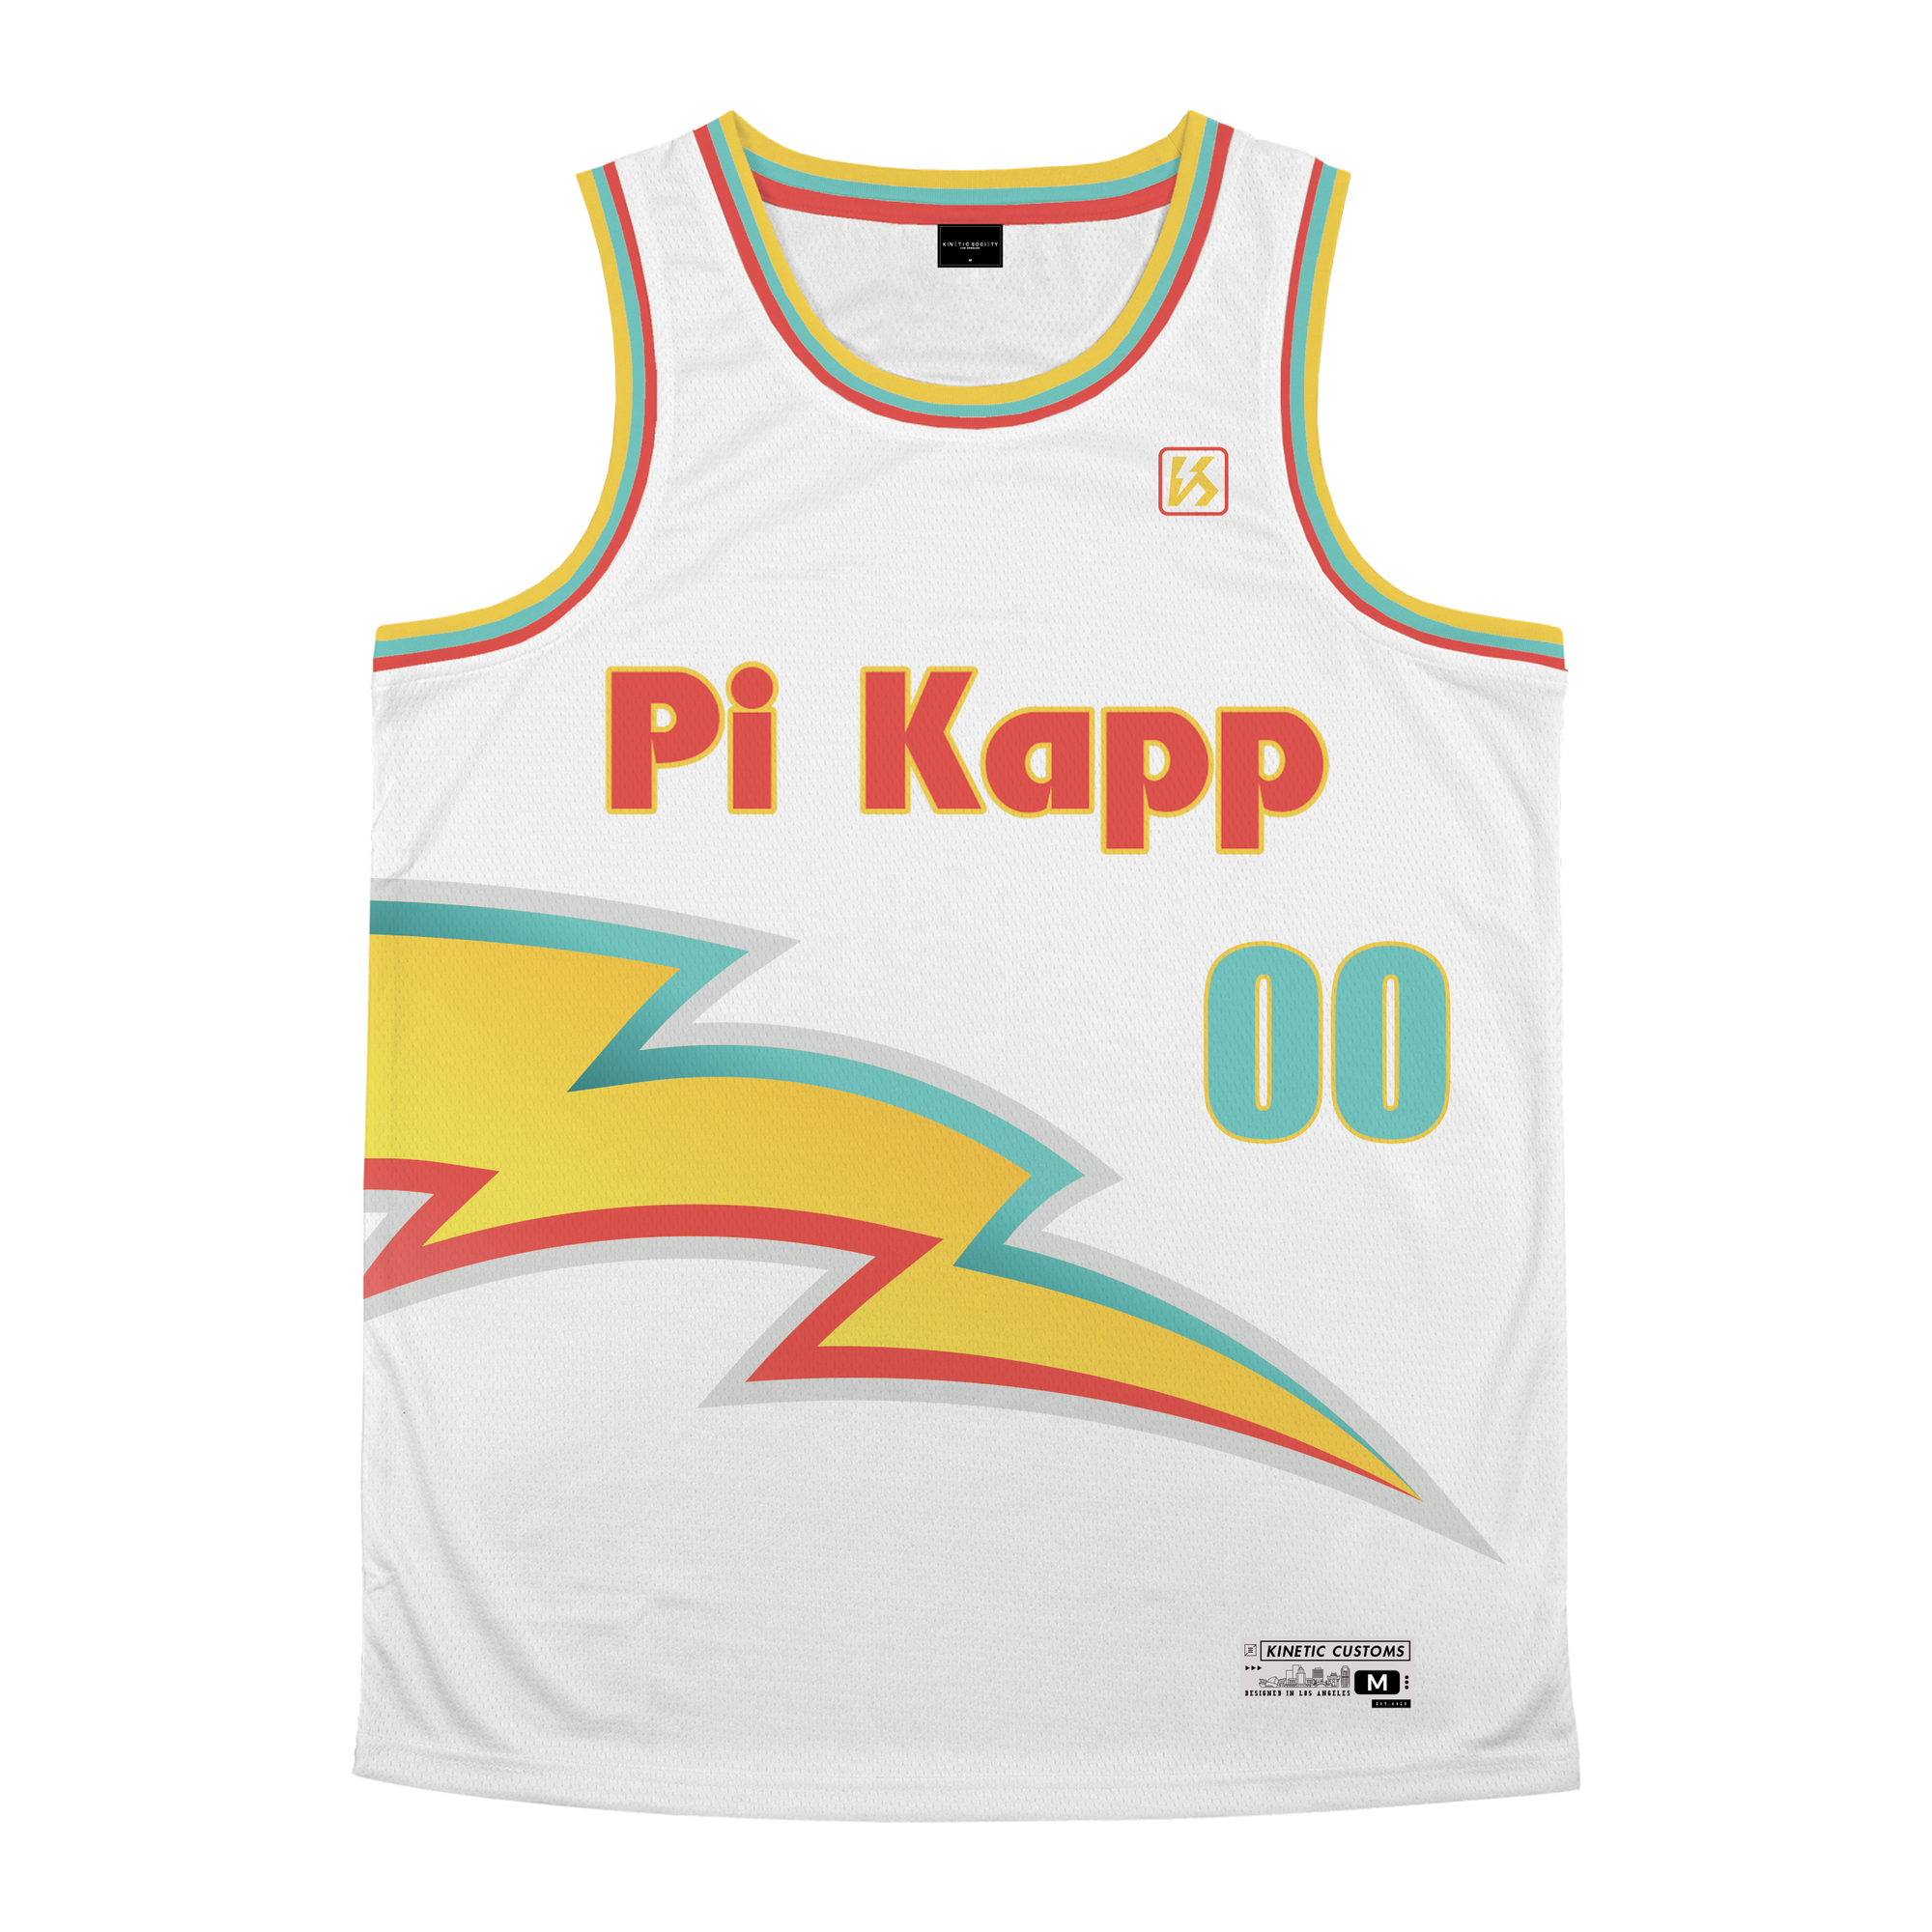 Pi Kappa Phi - Bolt Basketball Jersey